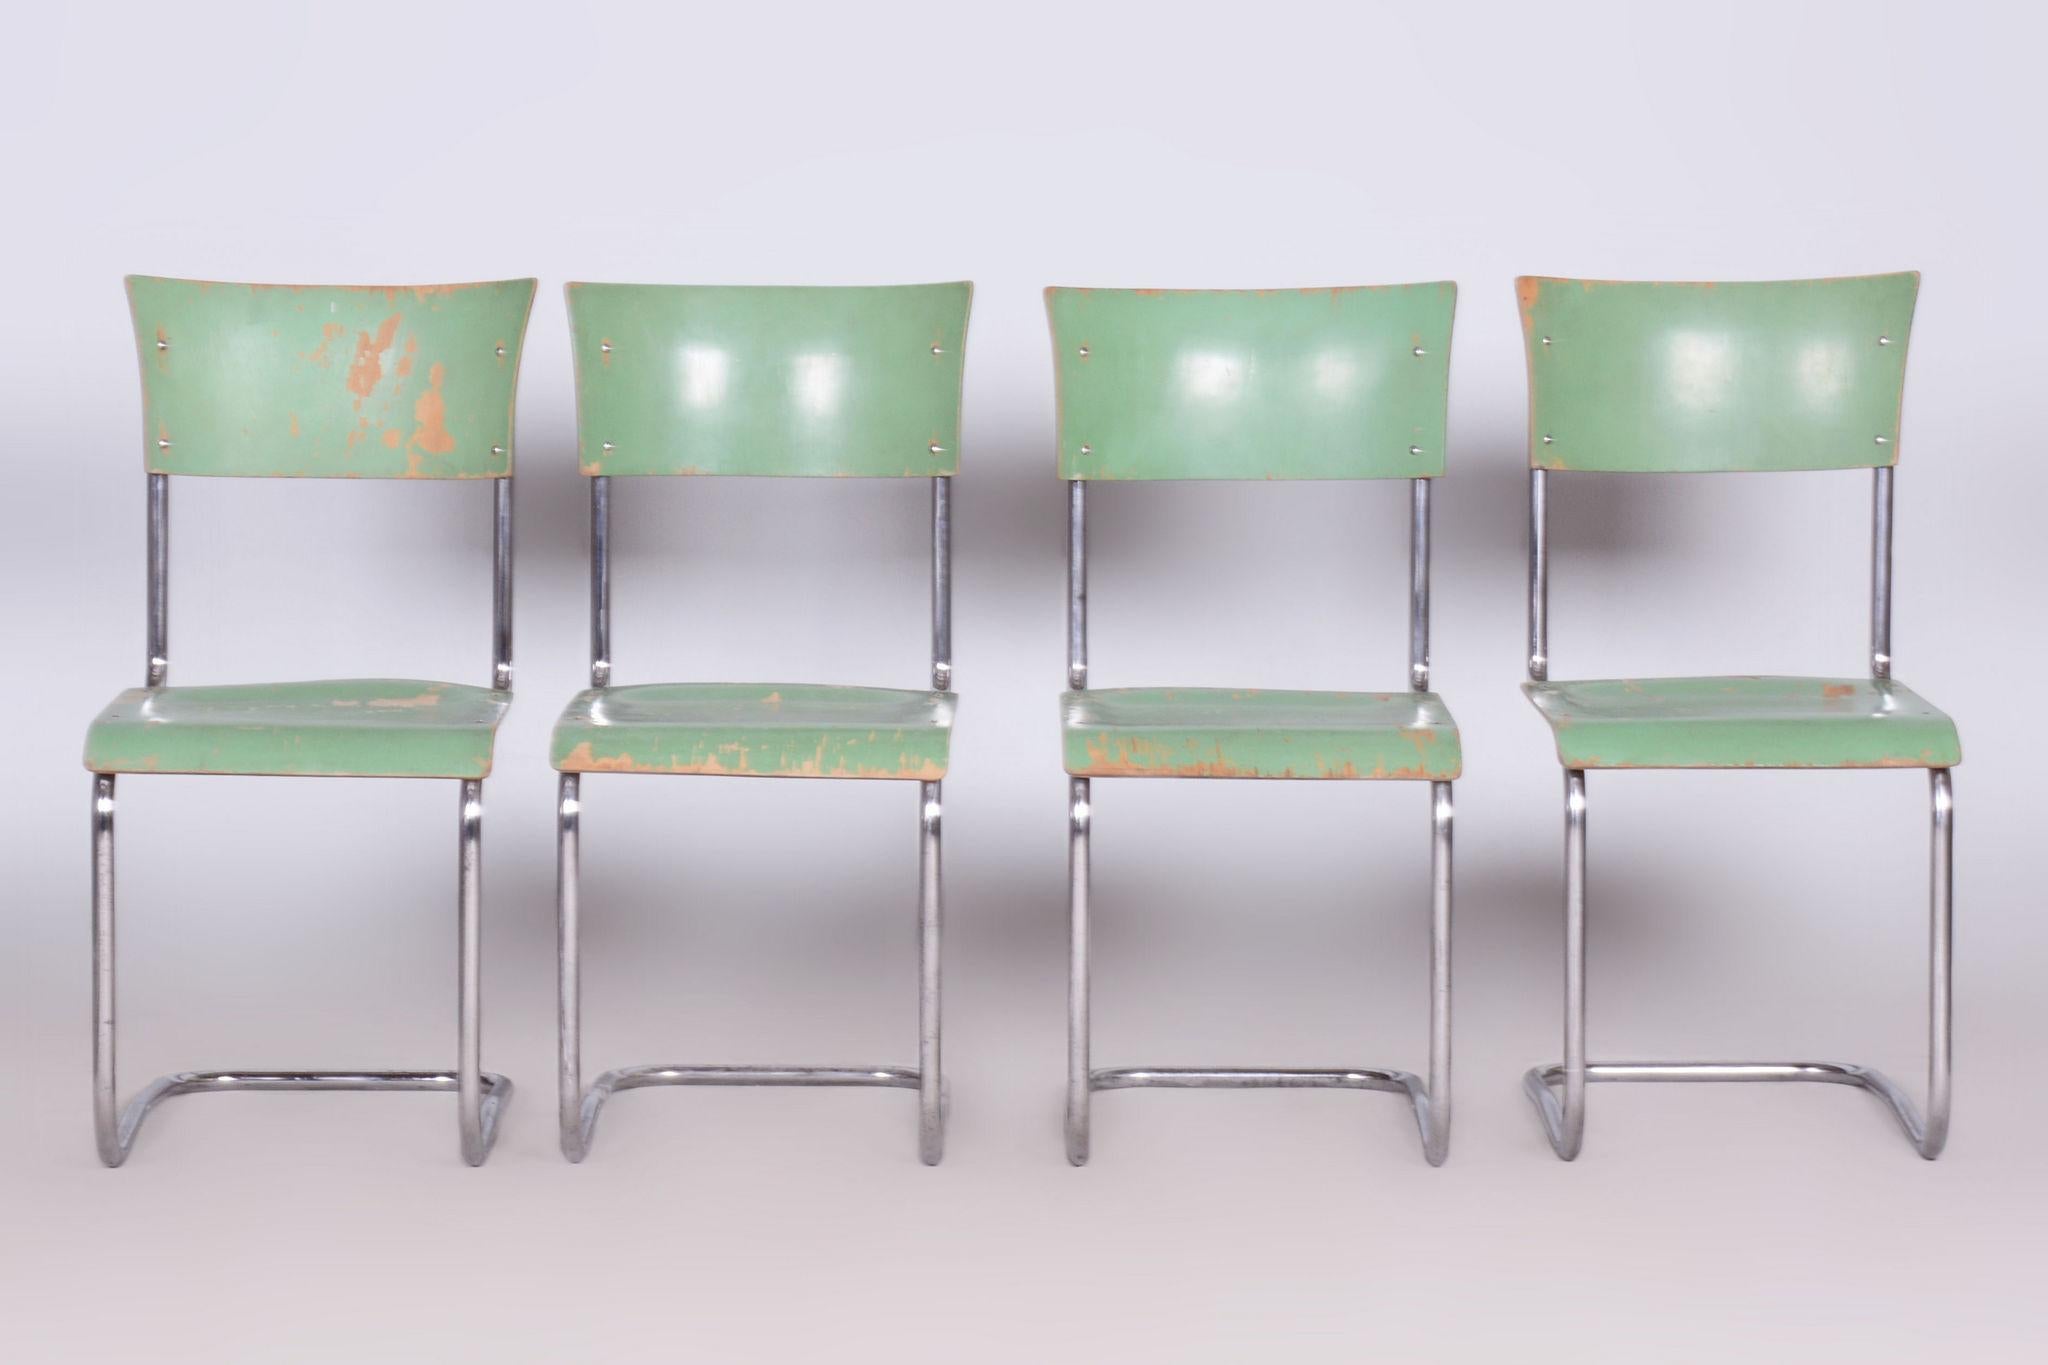 Bauhaus Set of Original Chairs, Robert Slezak, Chrome, Steel, Czechia, 1930s For Sale 5